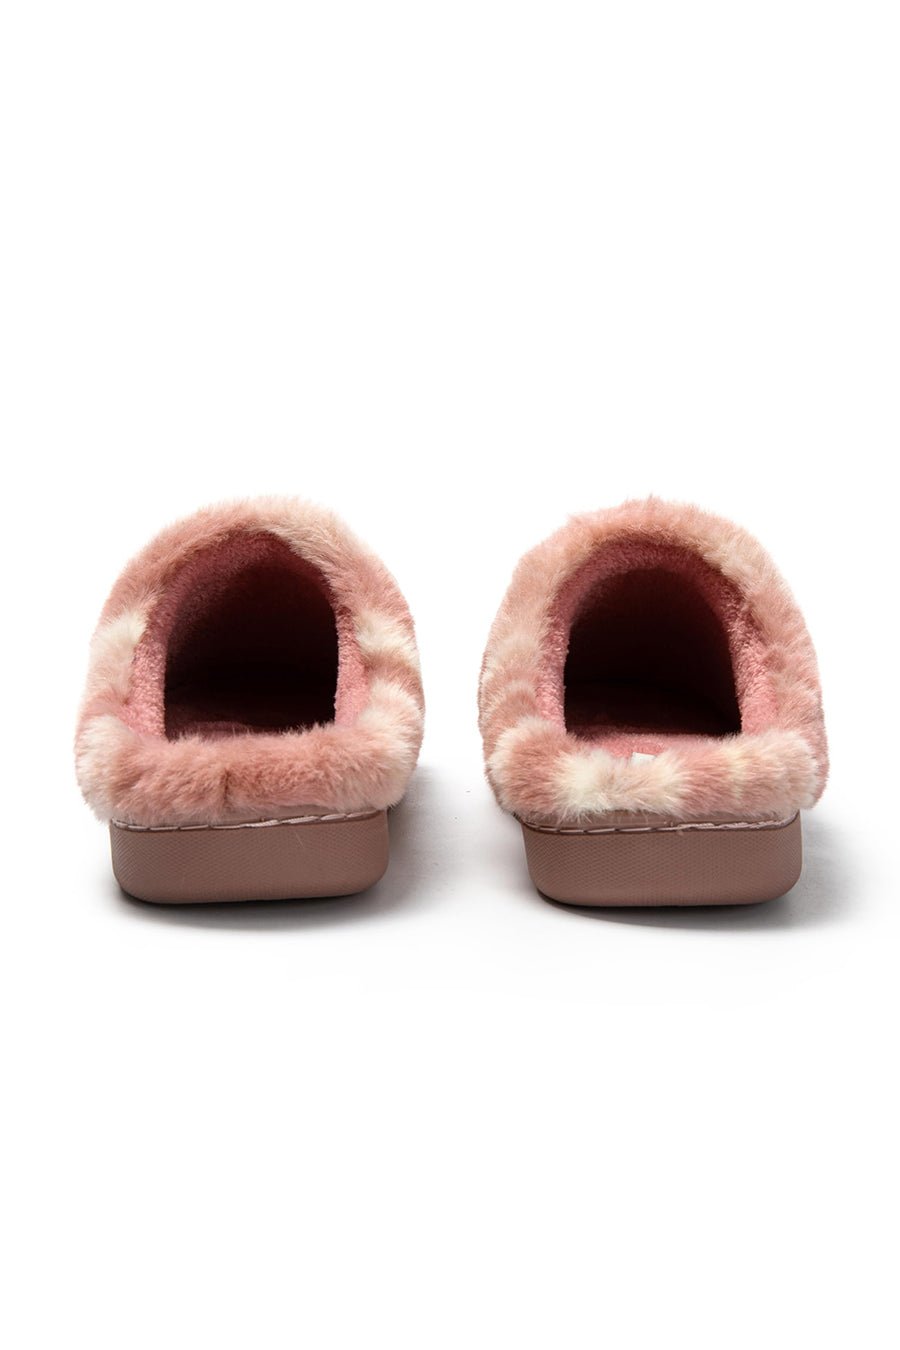 JOMIX Pantofole Donna Invernali Ciabatte Ragazze Pelose Calde da Casa MD8521